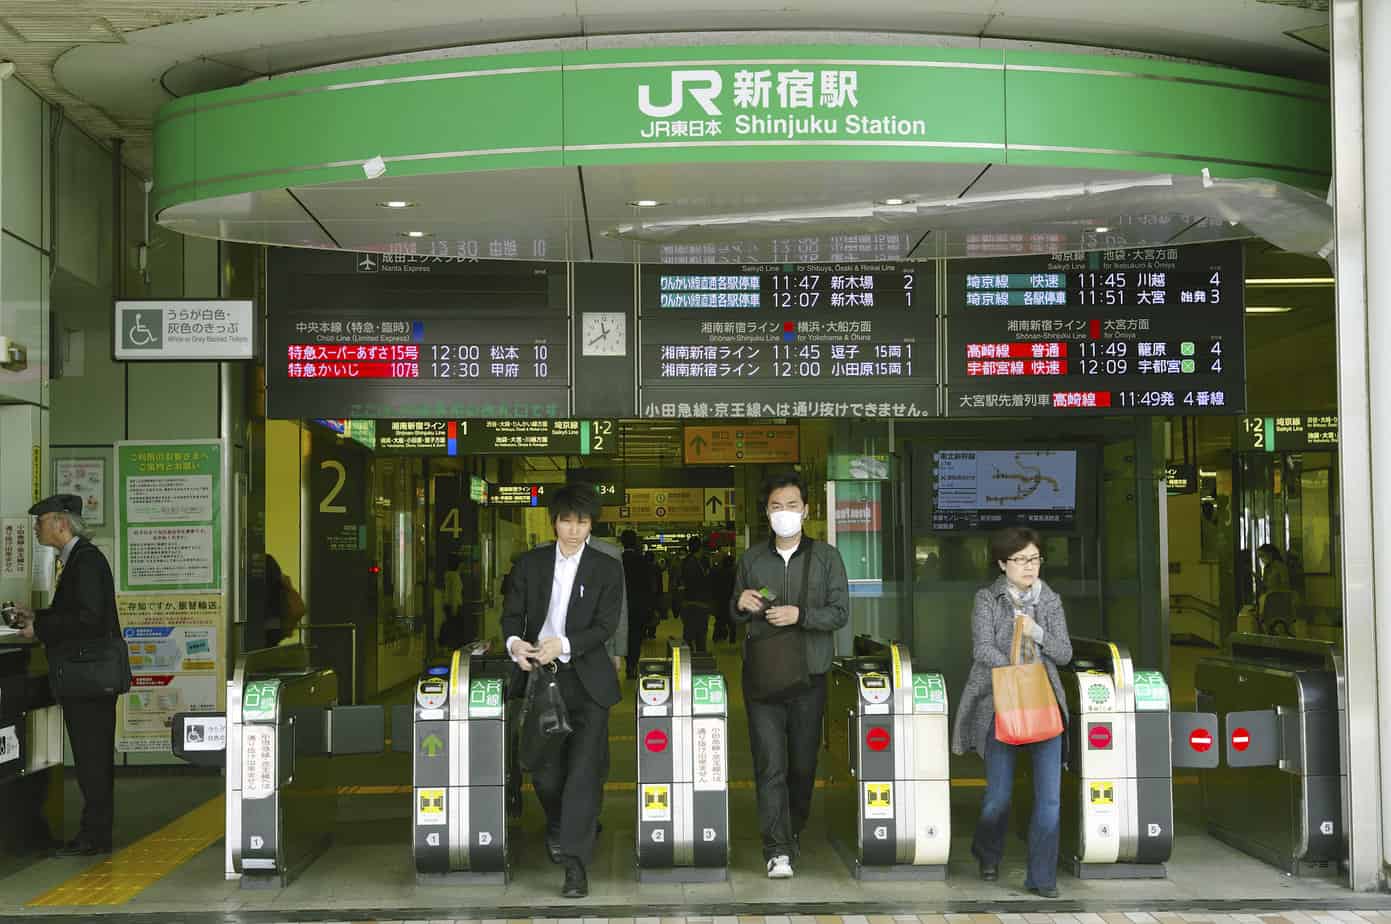 JR Shinjuku station